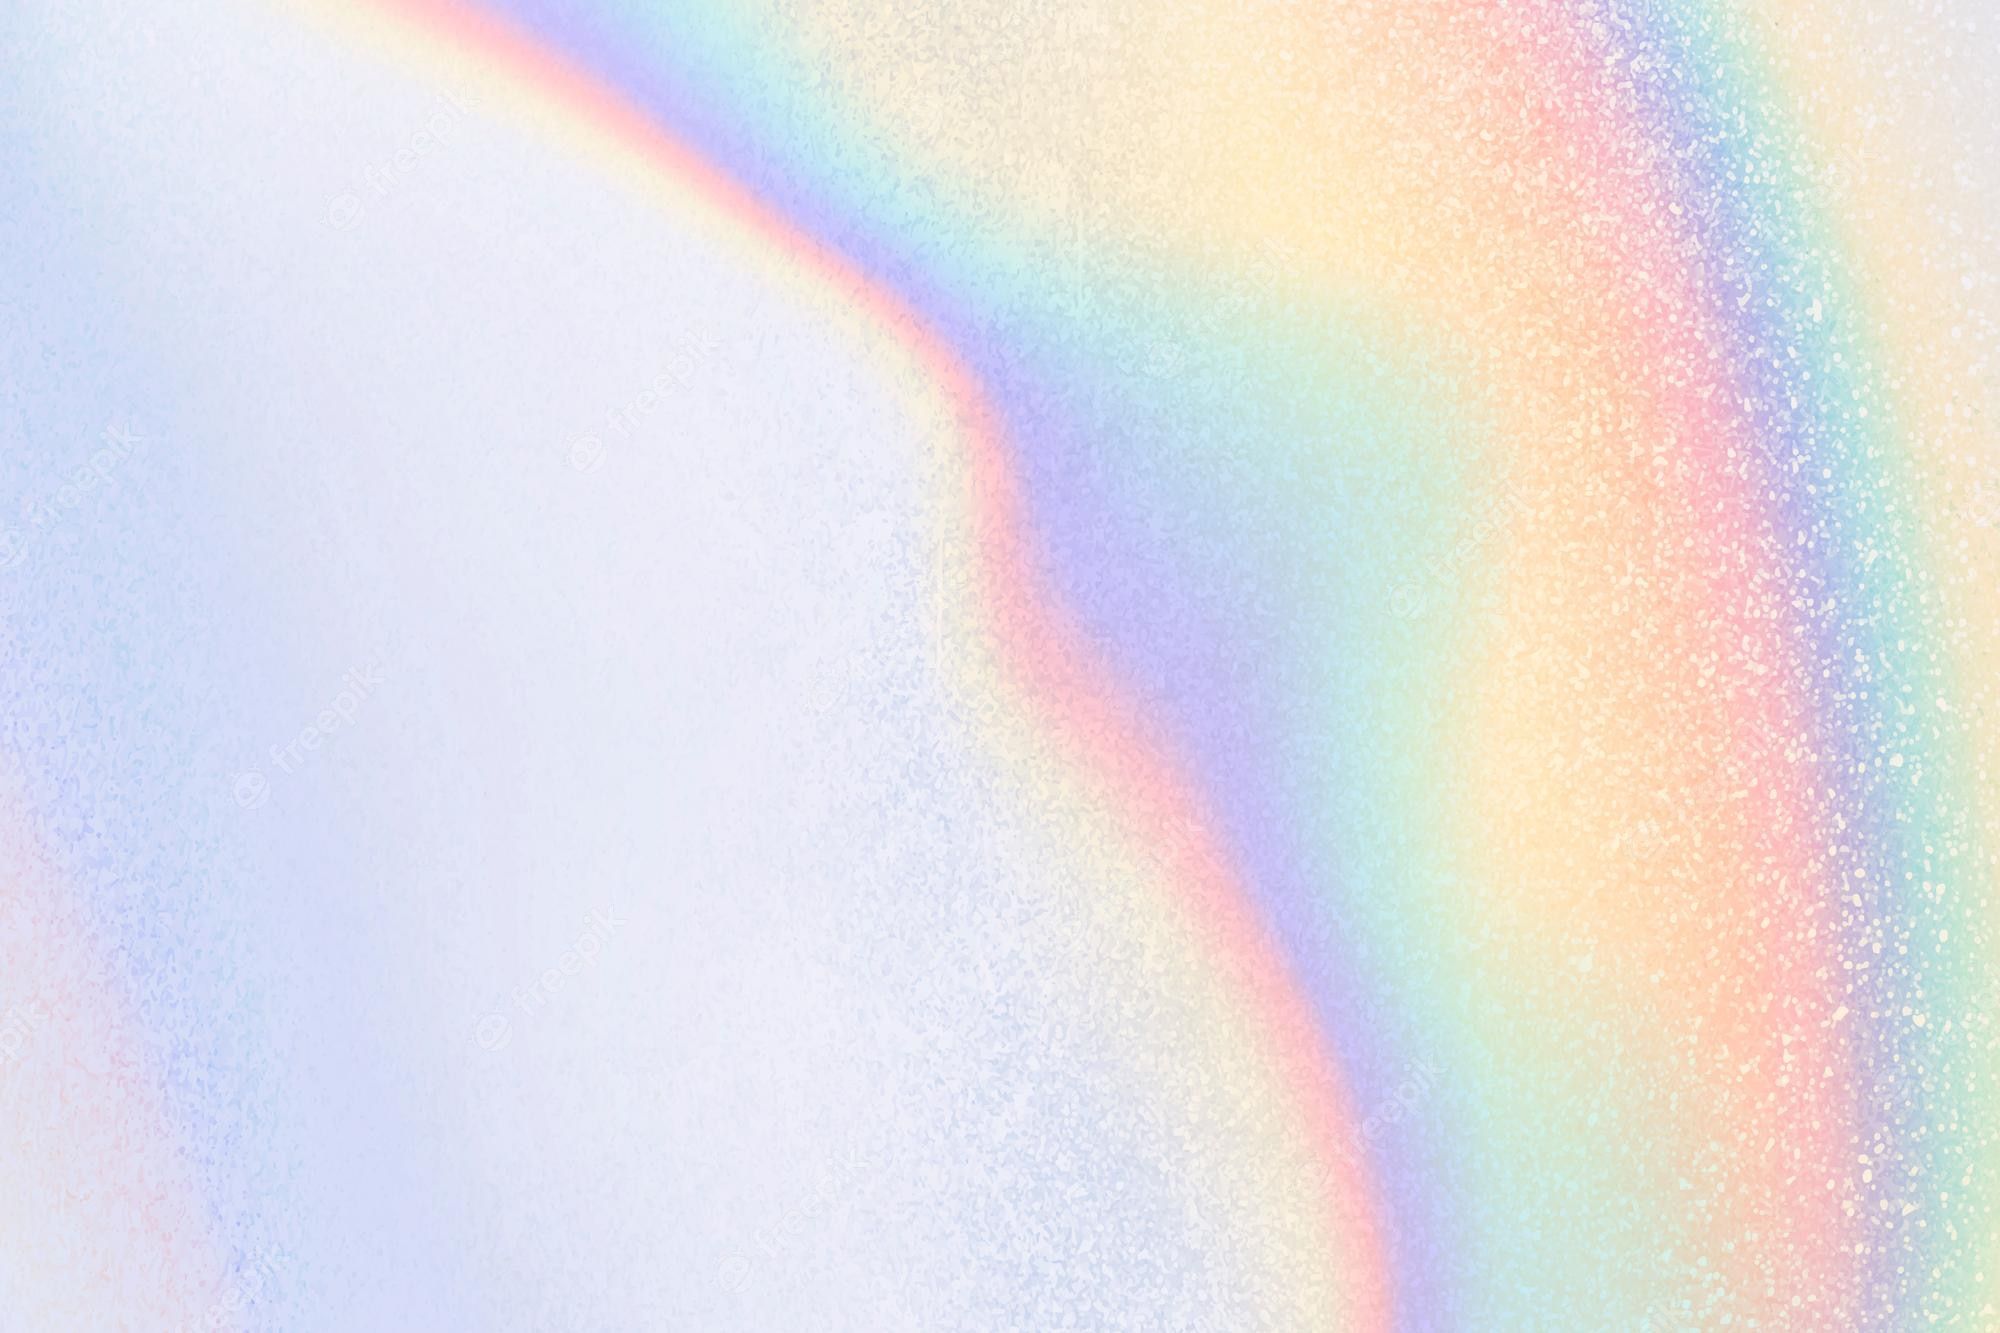 Rainbow Aesthetic Image